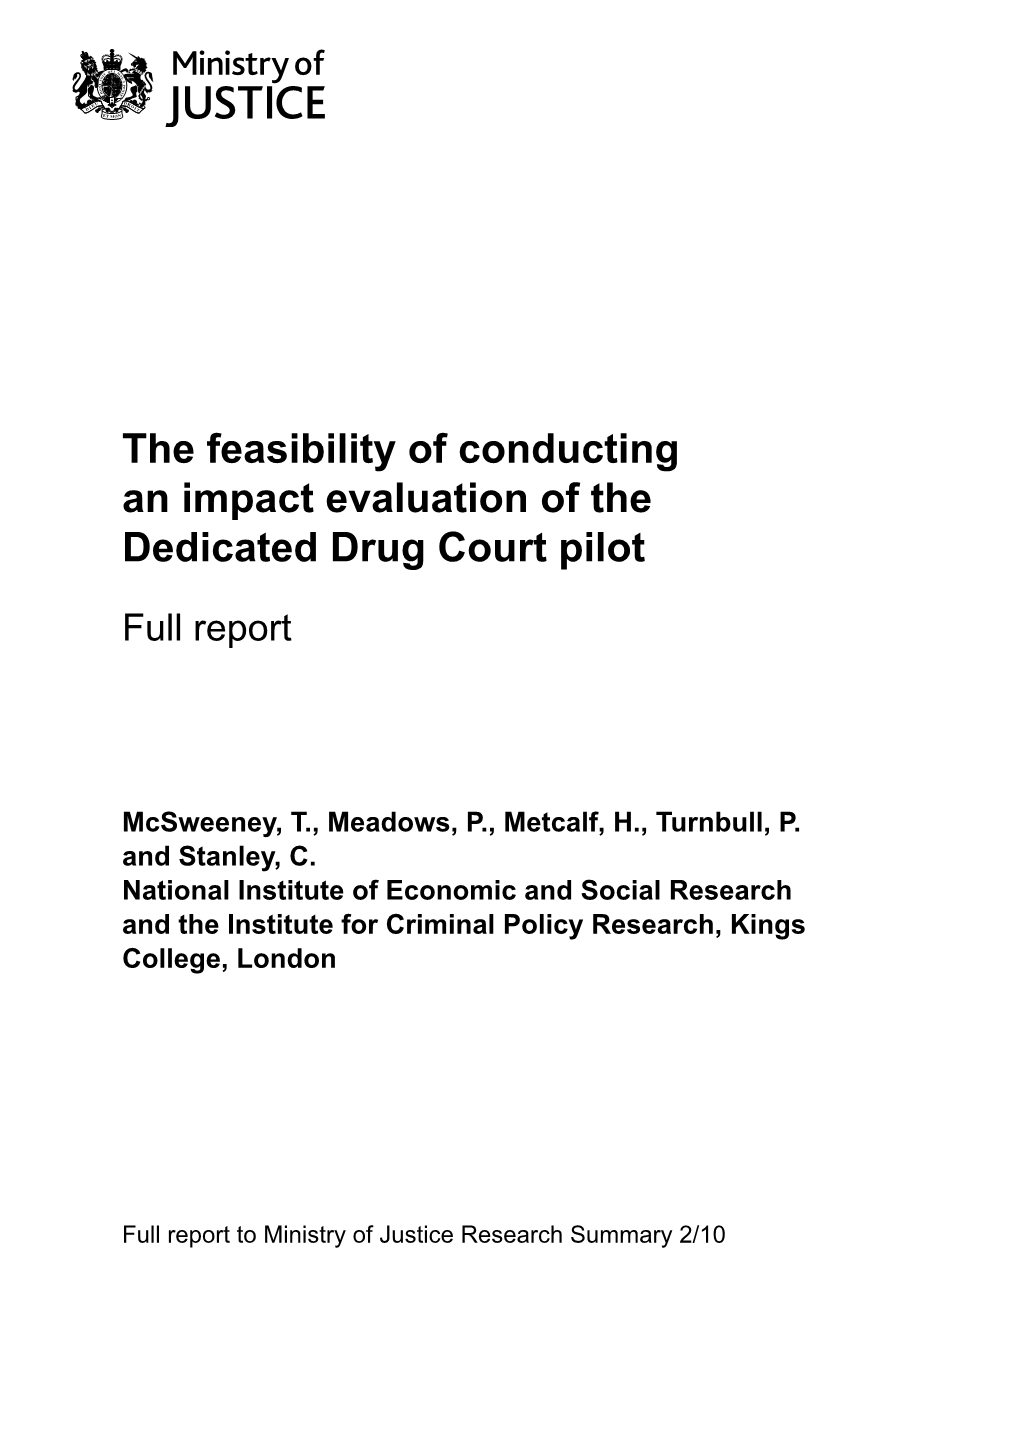 Dedicated Drug Court Full Report